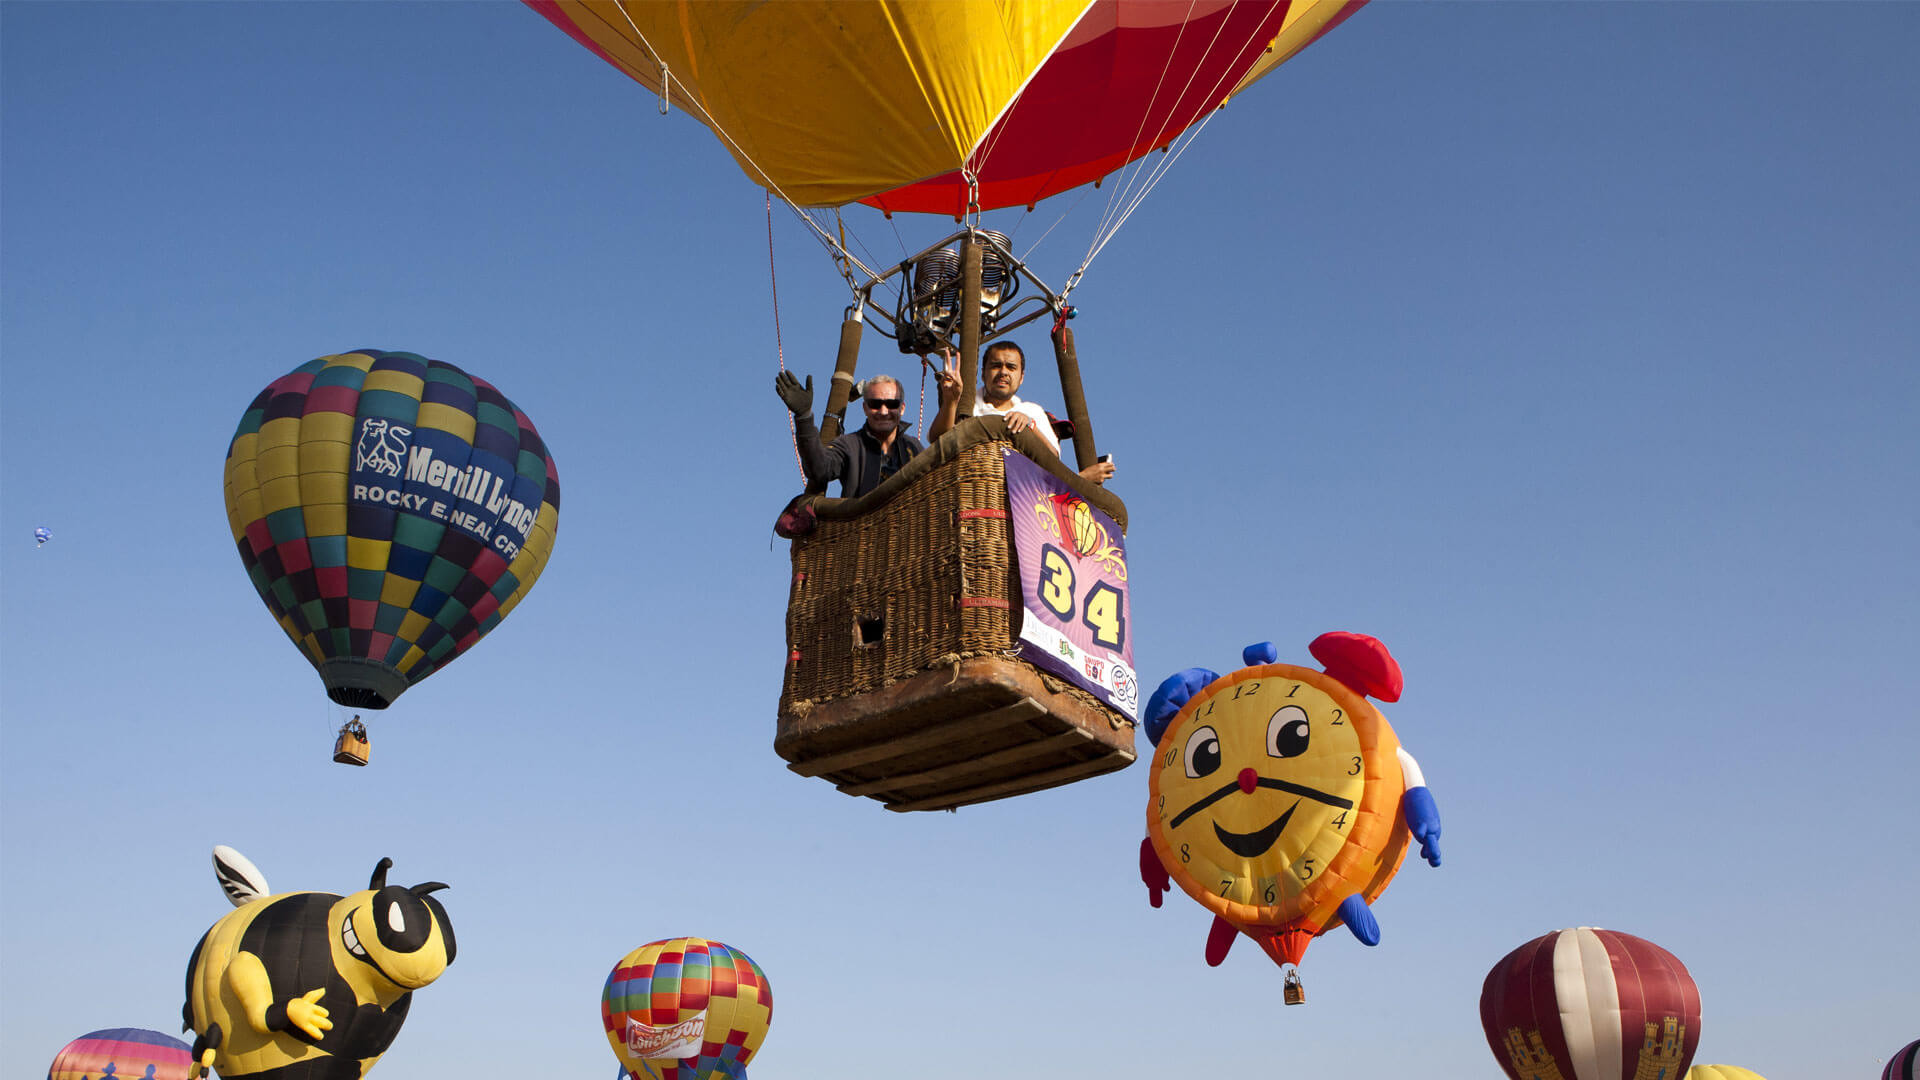 Hot Air Balloon Festival 2022 Dates, History, Venue, Major